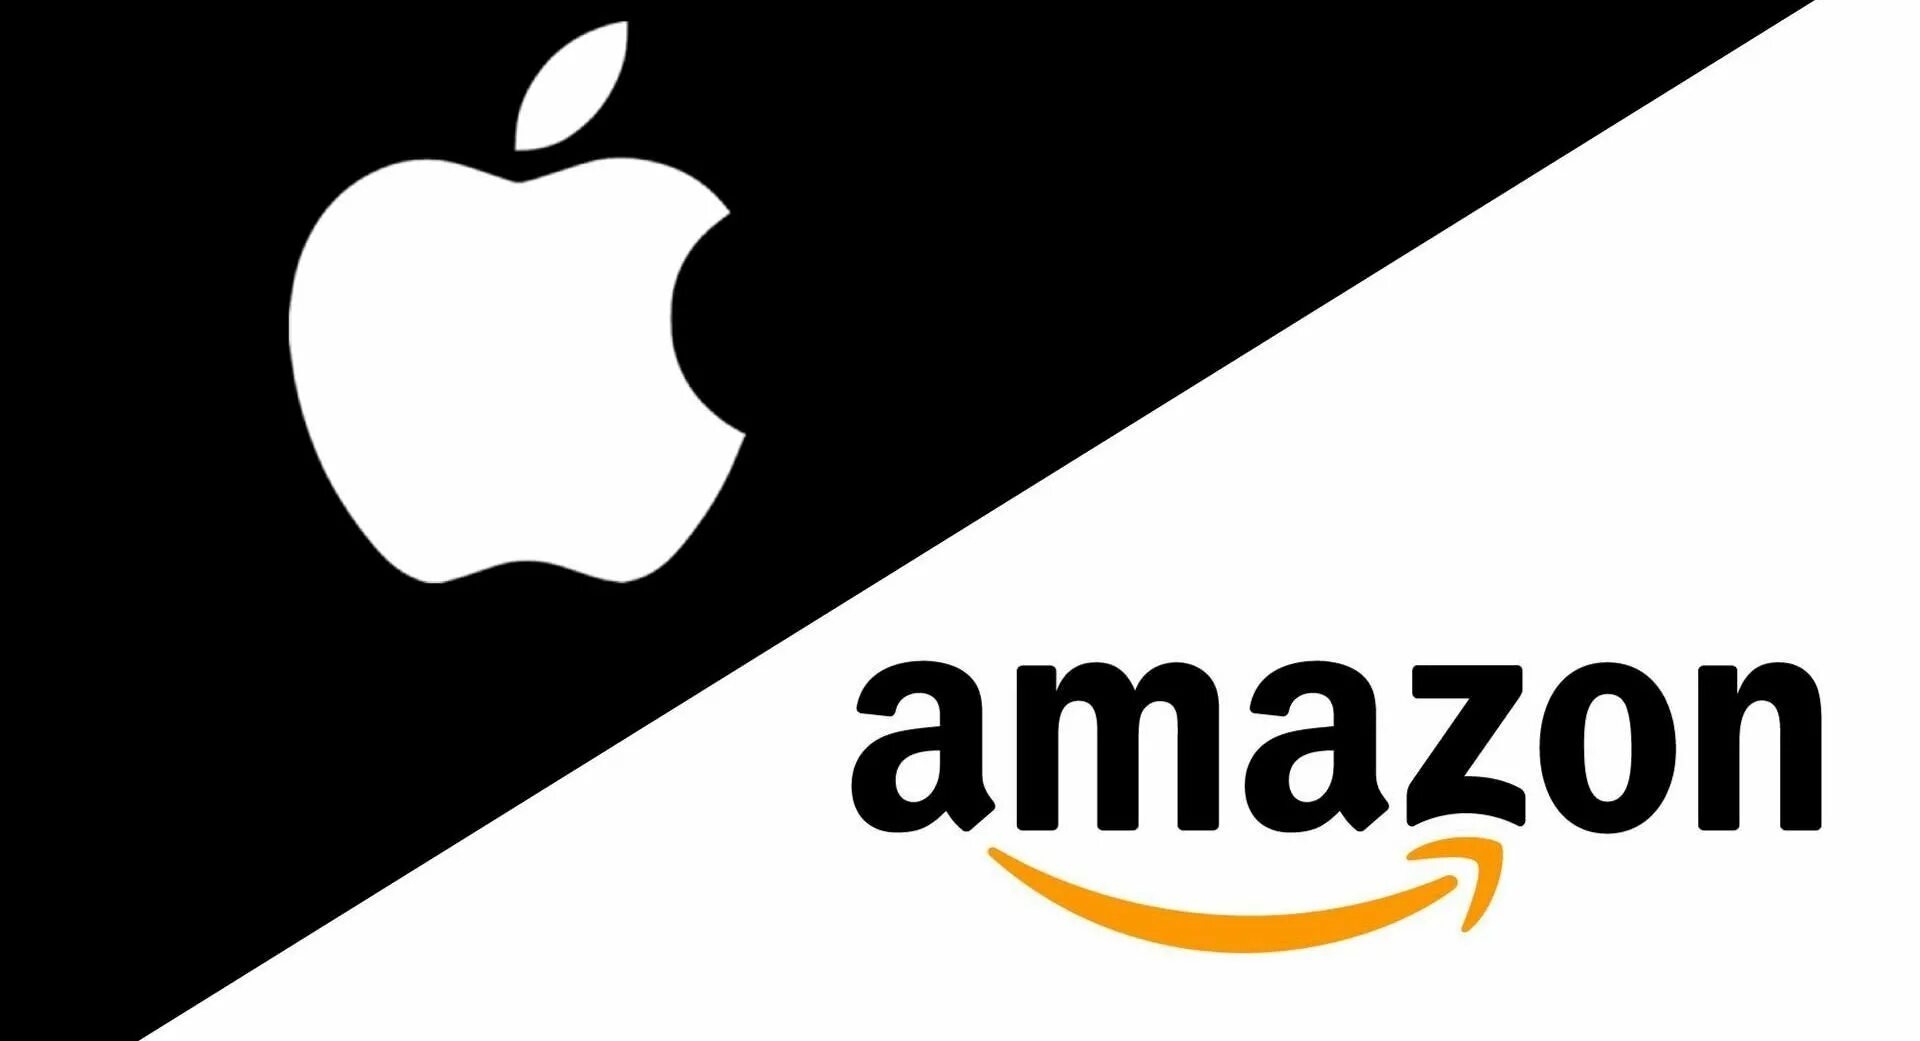 Amazon vs. Эппл. Амазон. Amazon и Аппле. The Amazon.